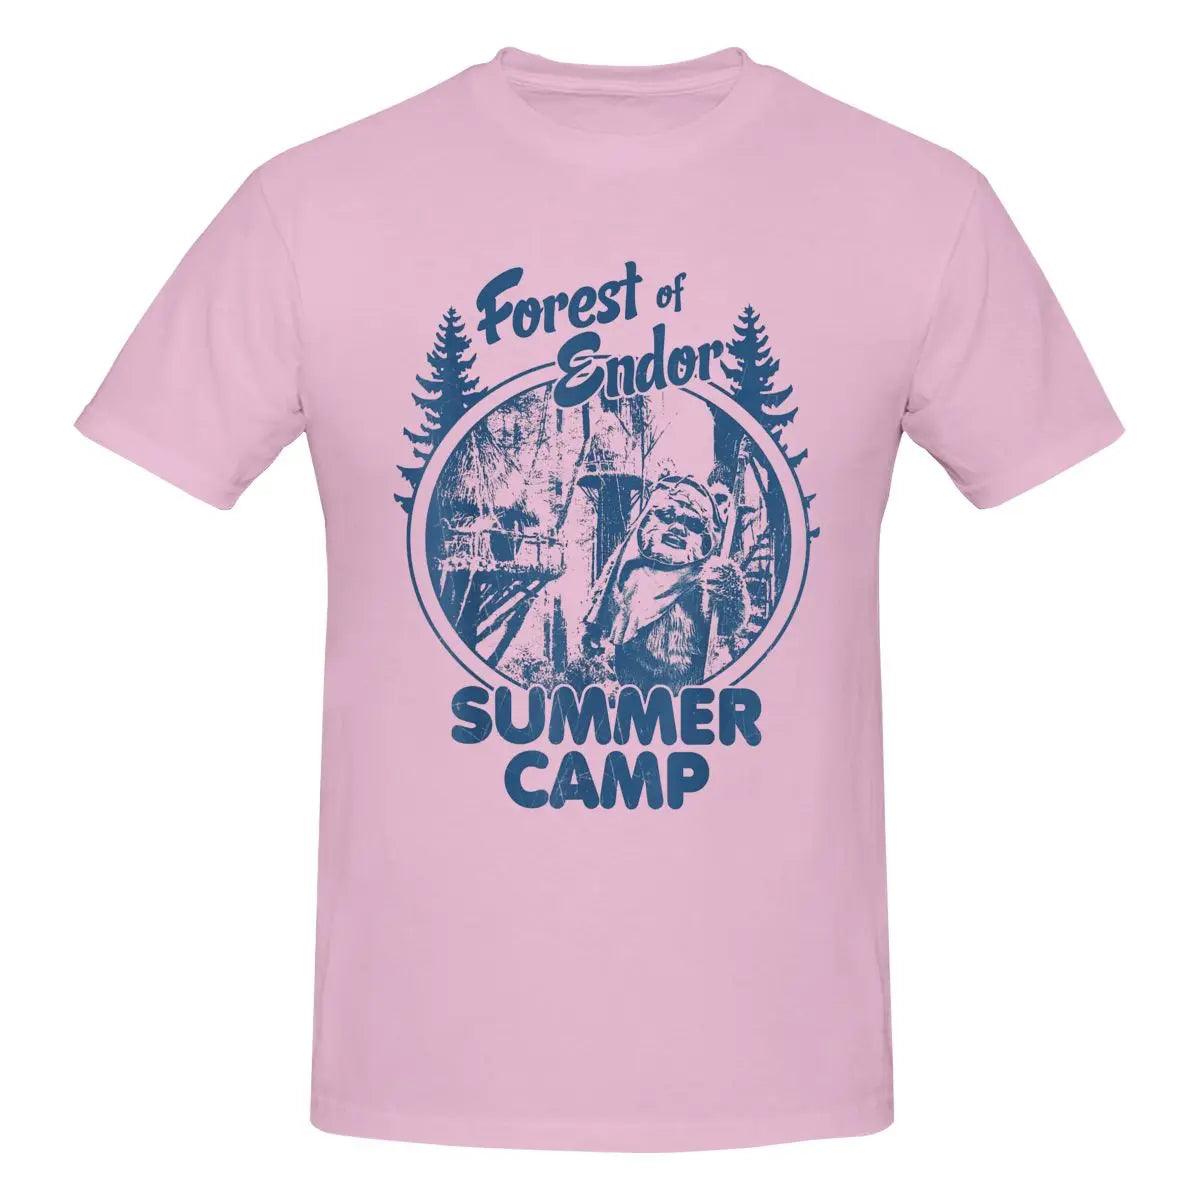 Summer Camp T Shirts - Epic Shirts 403